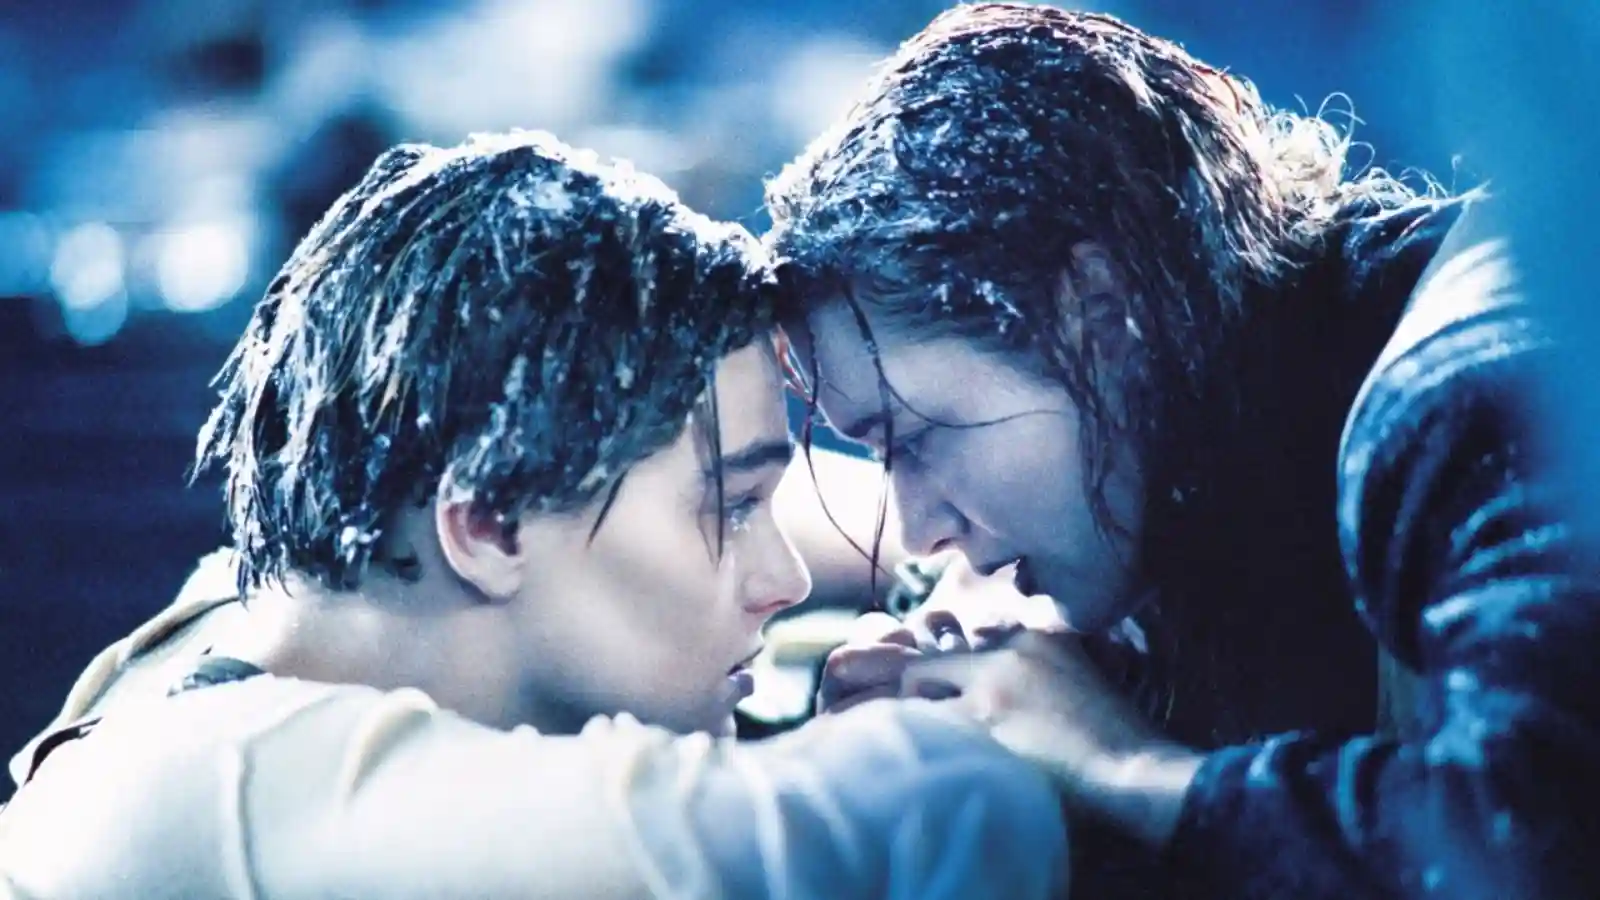 A scene from 'Titanic'